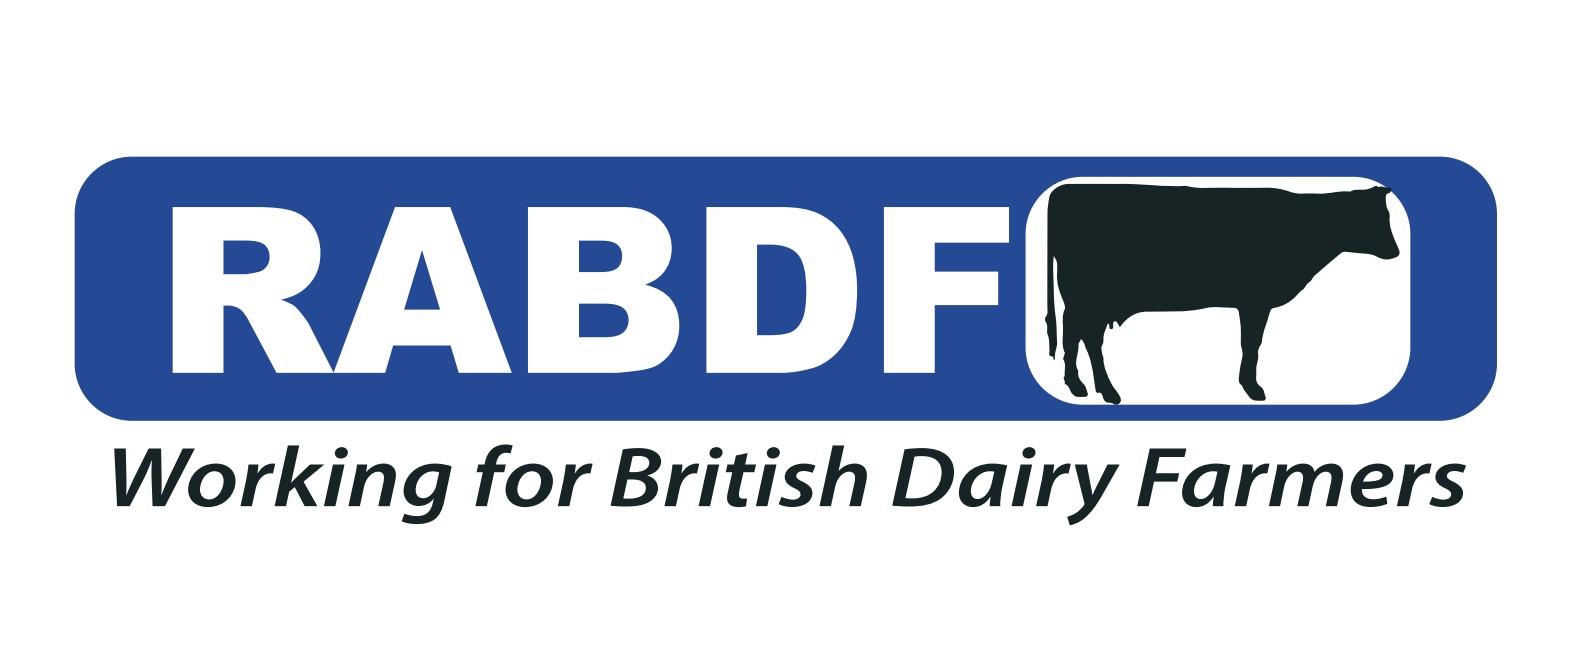 RABDF - The Royal Association of British Dairy Farmers